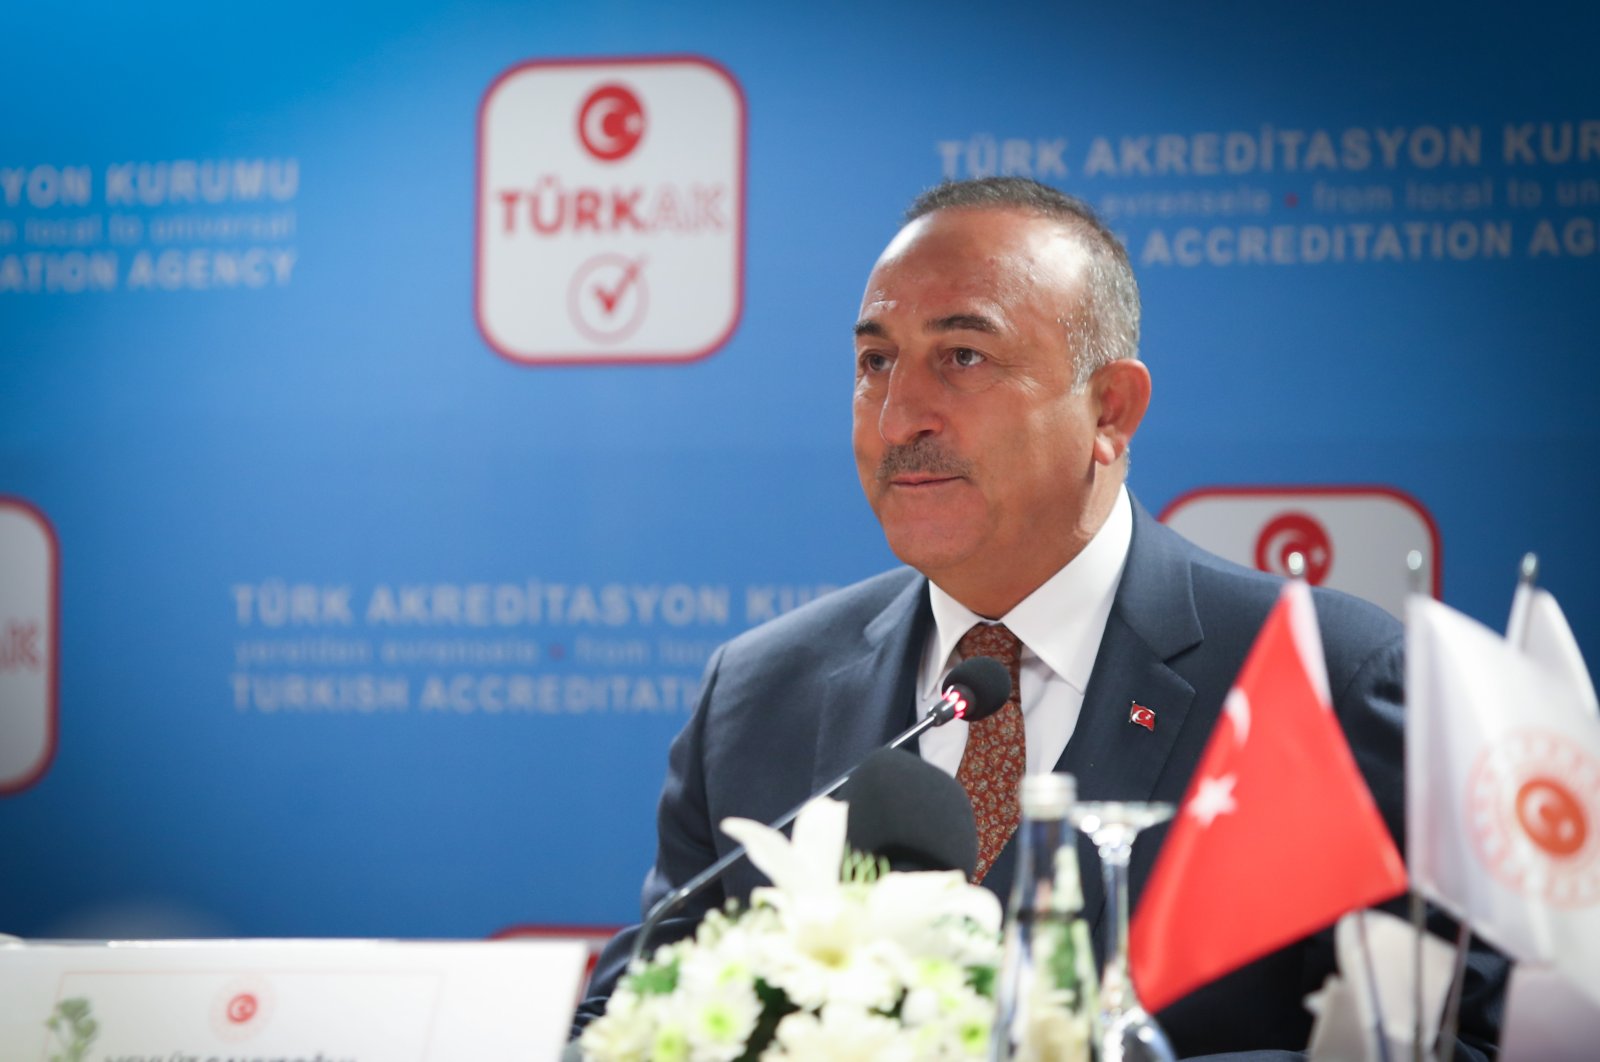 Foreign Minister Mevlüt Çavuşoğlu addresses staff of the Turkish Accreditation Agency (TÜRKAK) in the capital Ankara, Turkey, Dec. 24, 2020. (AA Photo)